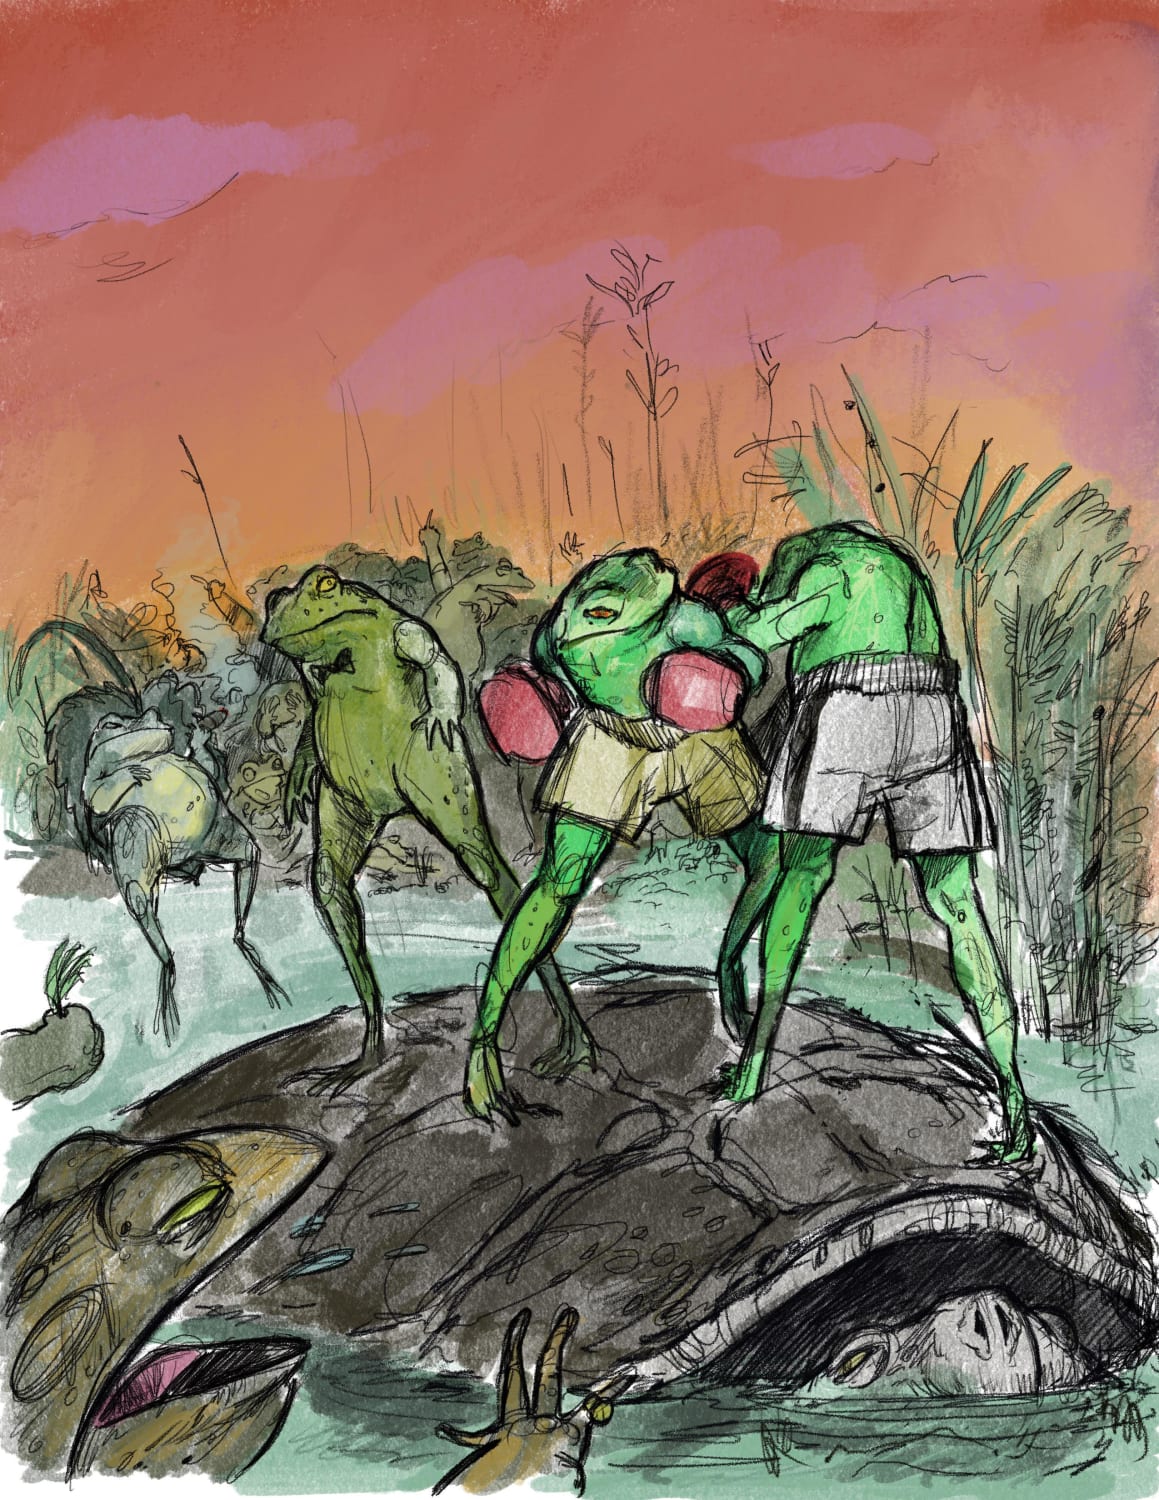 Boxing Frogs, Me, digital (Procreate), 2020